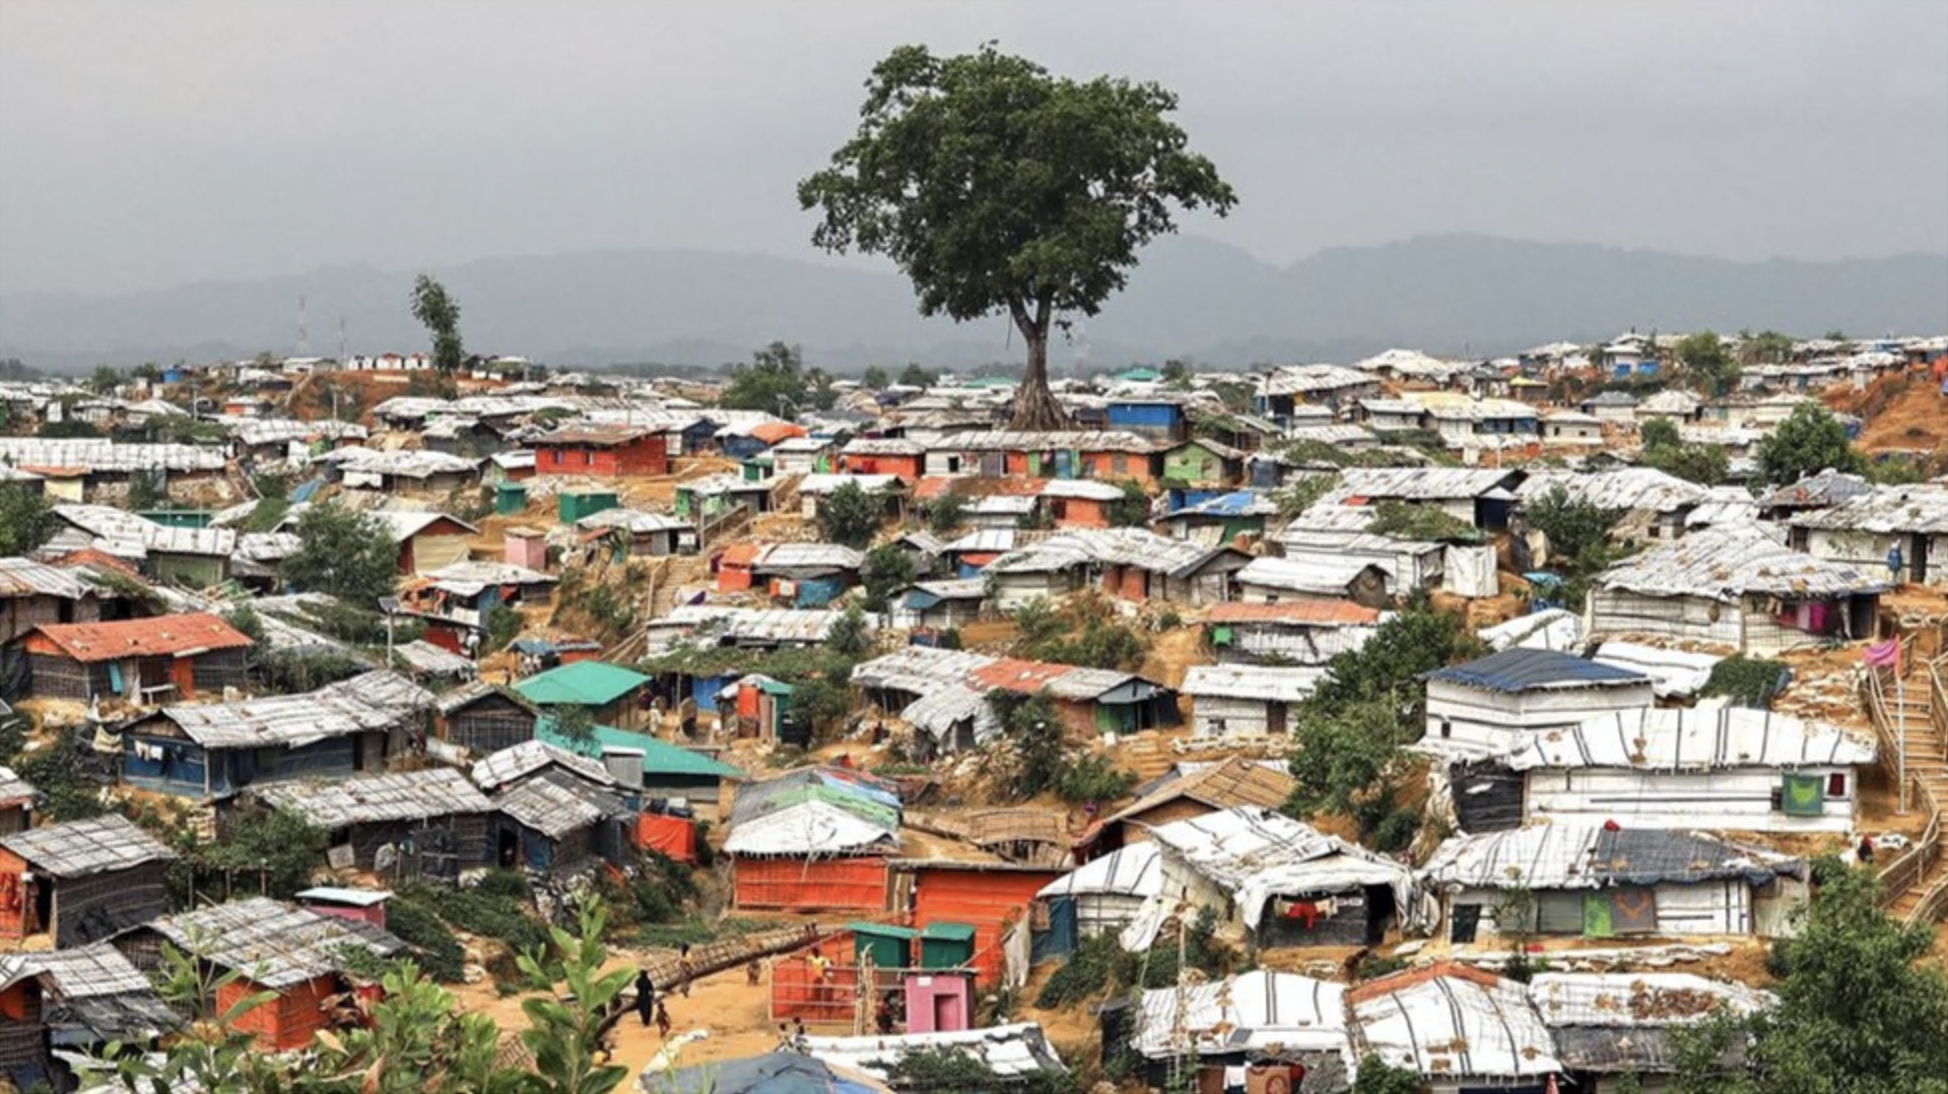 Kamp pengungsi Rohingya di Cox's Bazar, Bangladesh 